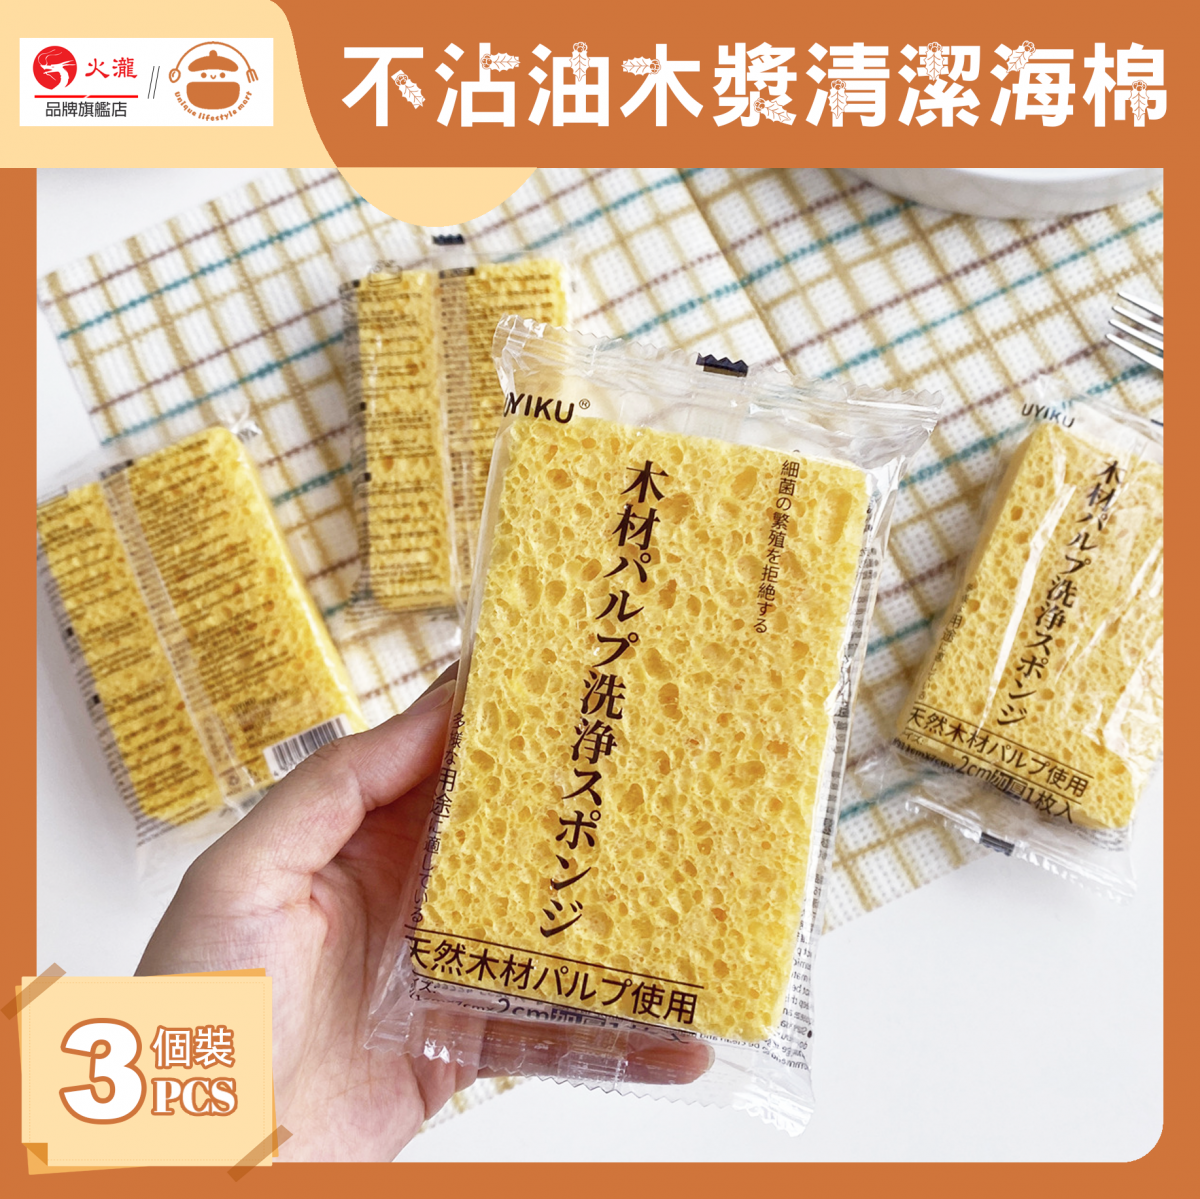 Non-oily wood pulp cleaning sponge [3 pieces] - wood pulp sponge | magic wipe | dishwashing sponge |